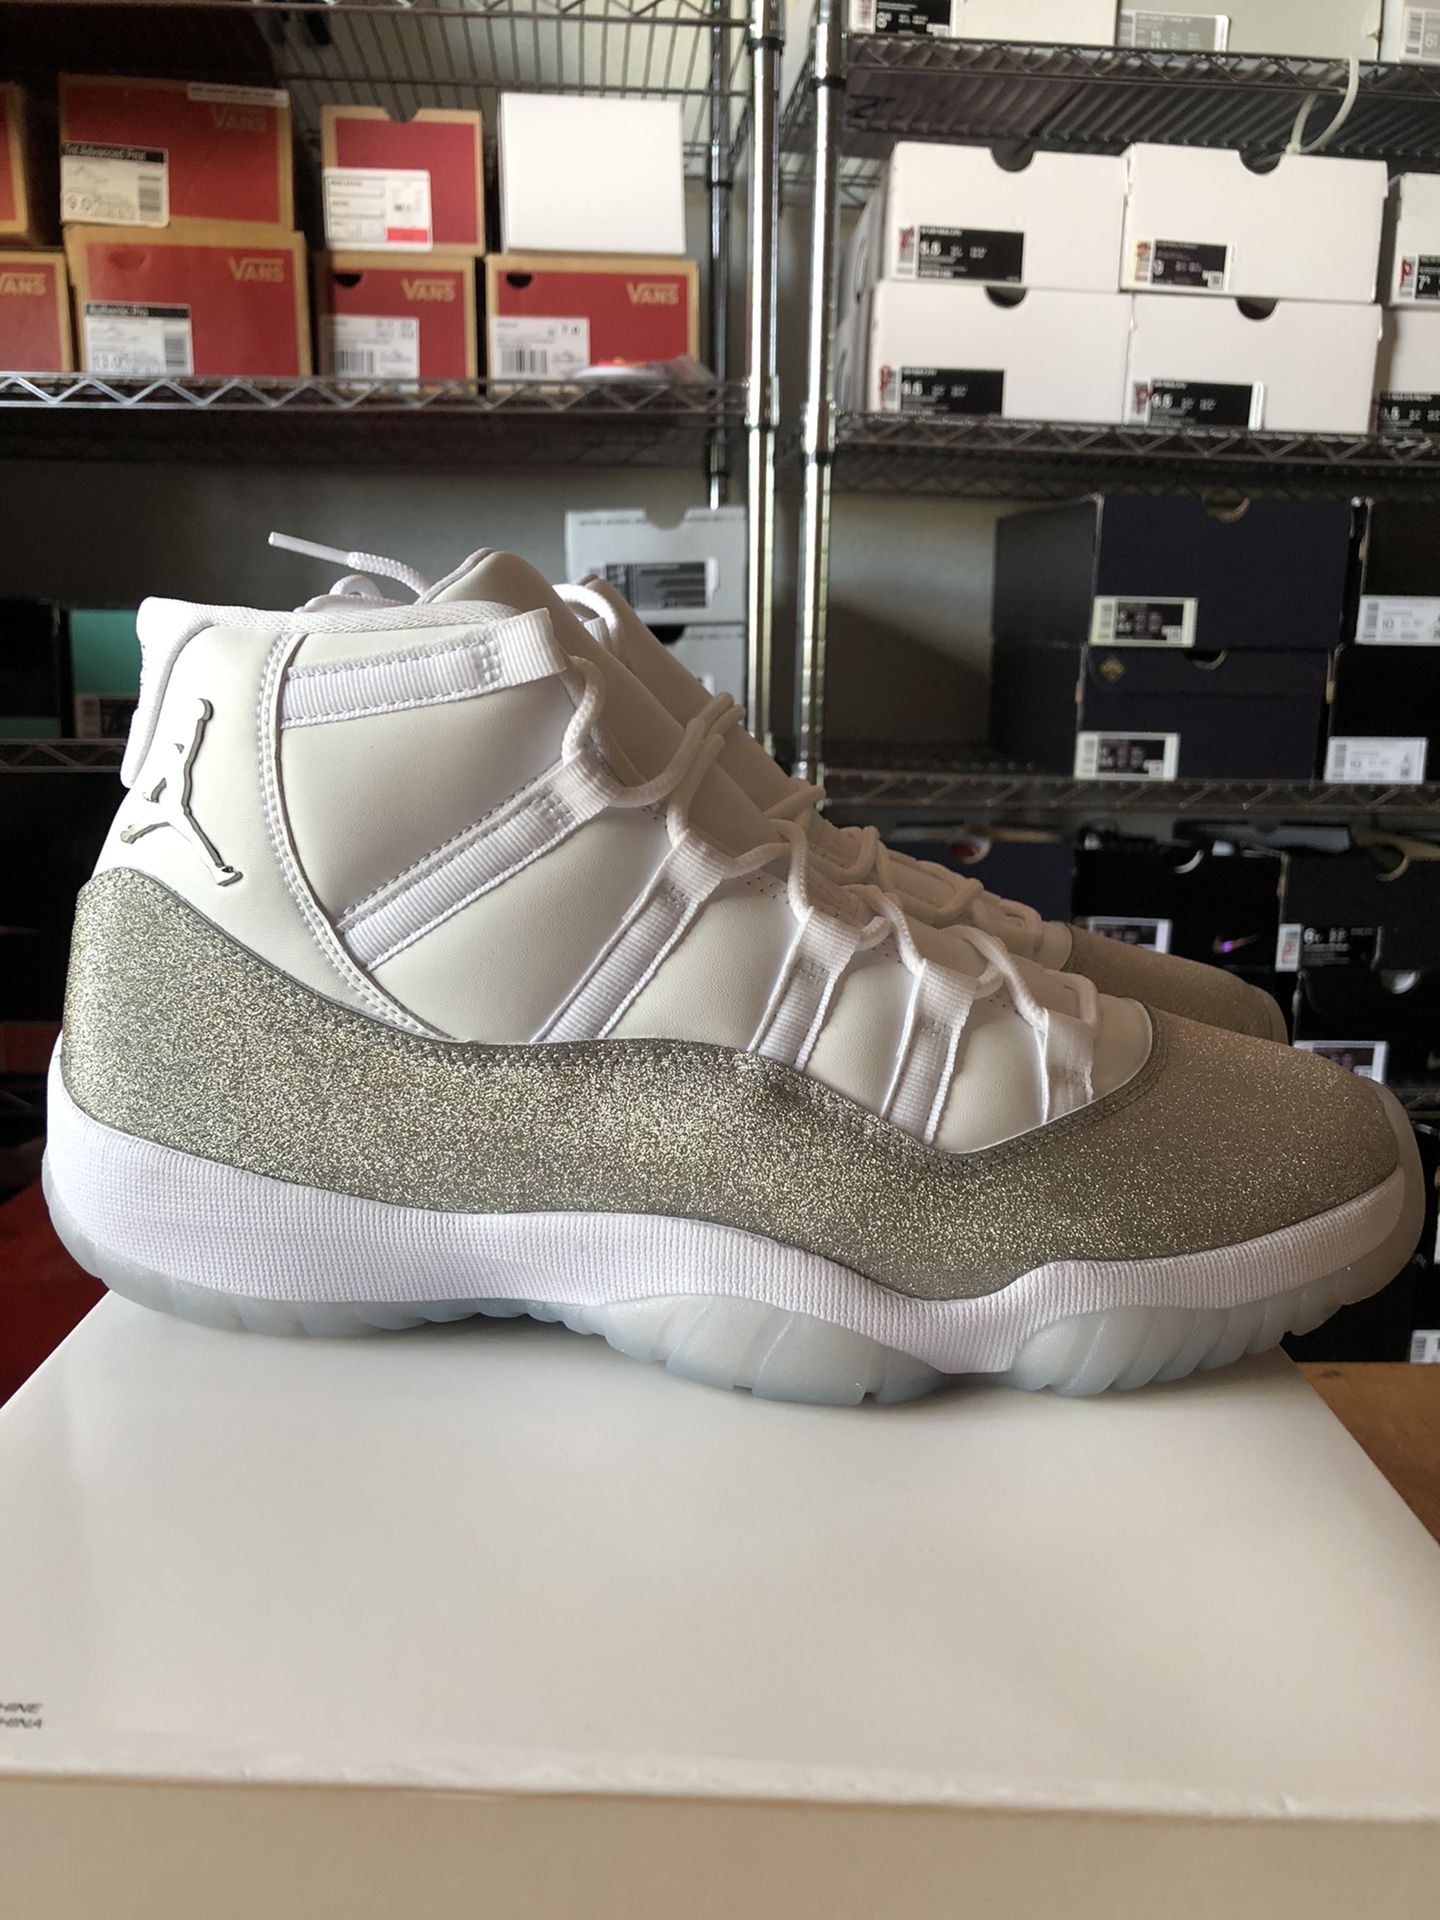 Brand new Nike air Jordan 11 retro white silver gray premium shoes women’s 12, men’s 10.5